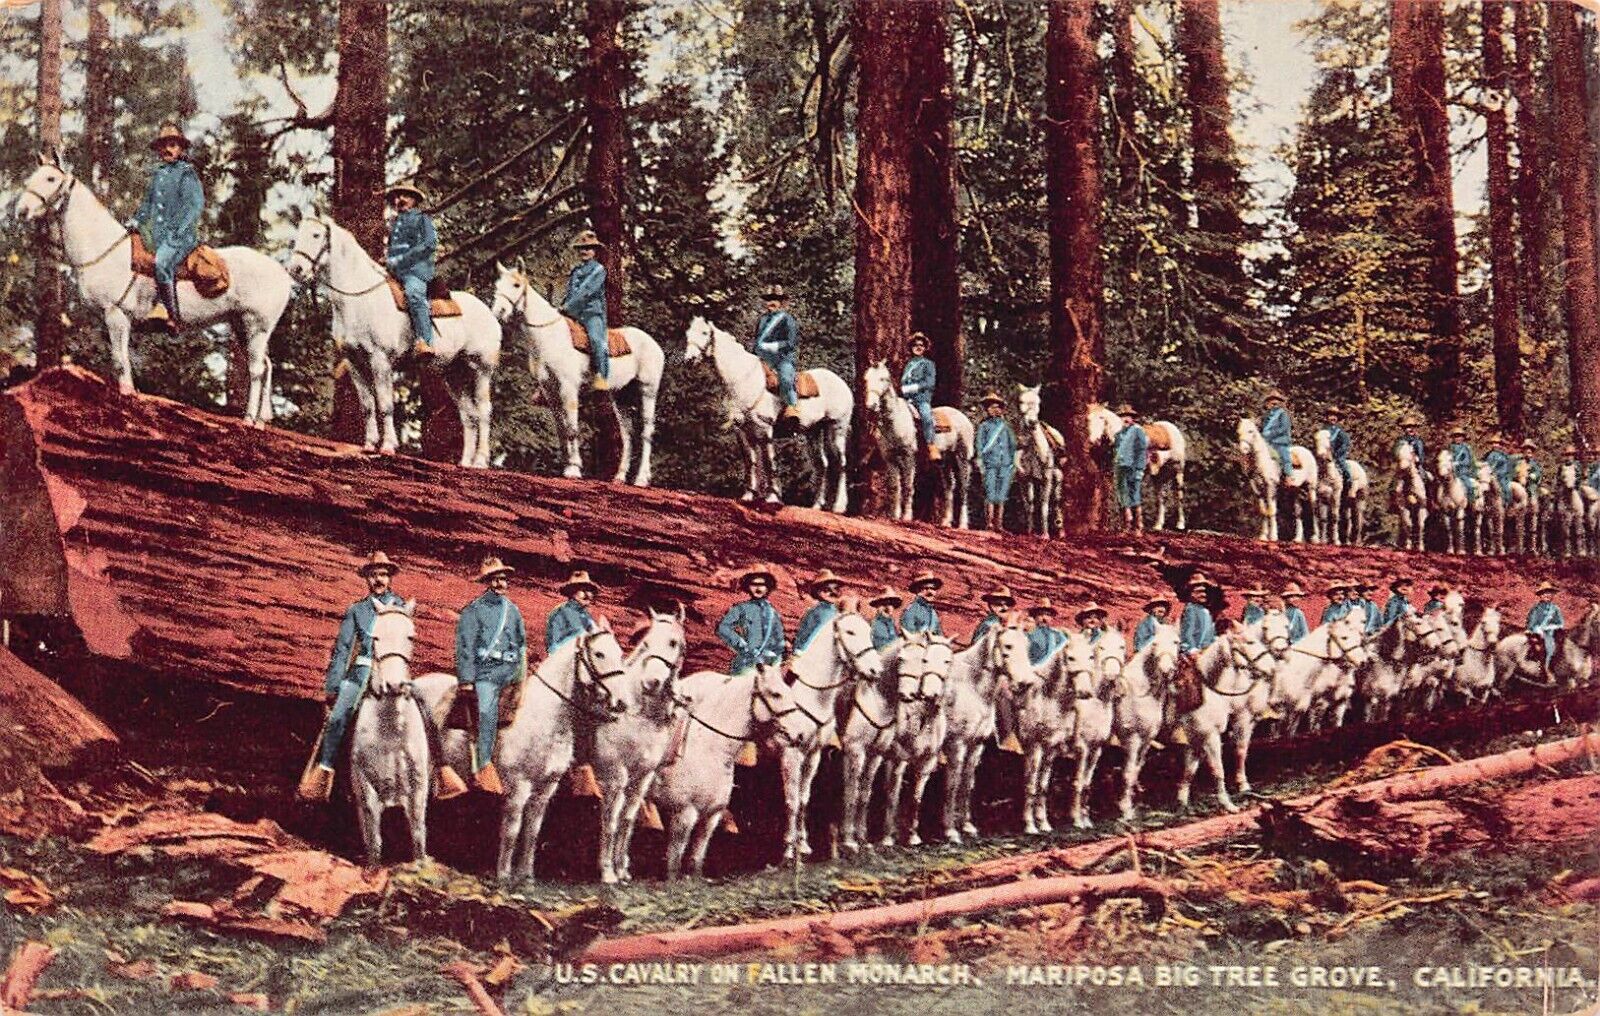 Yosemite Mariposa Grove Giant Sequoias Fallen Monarch Tree Army Vtg Postcard A54